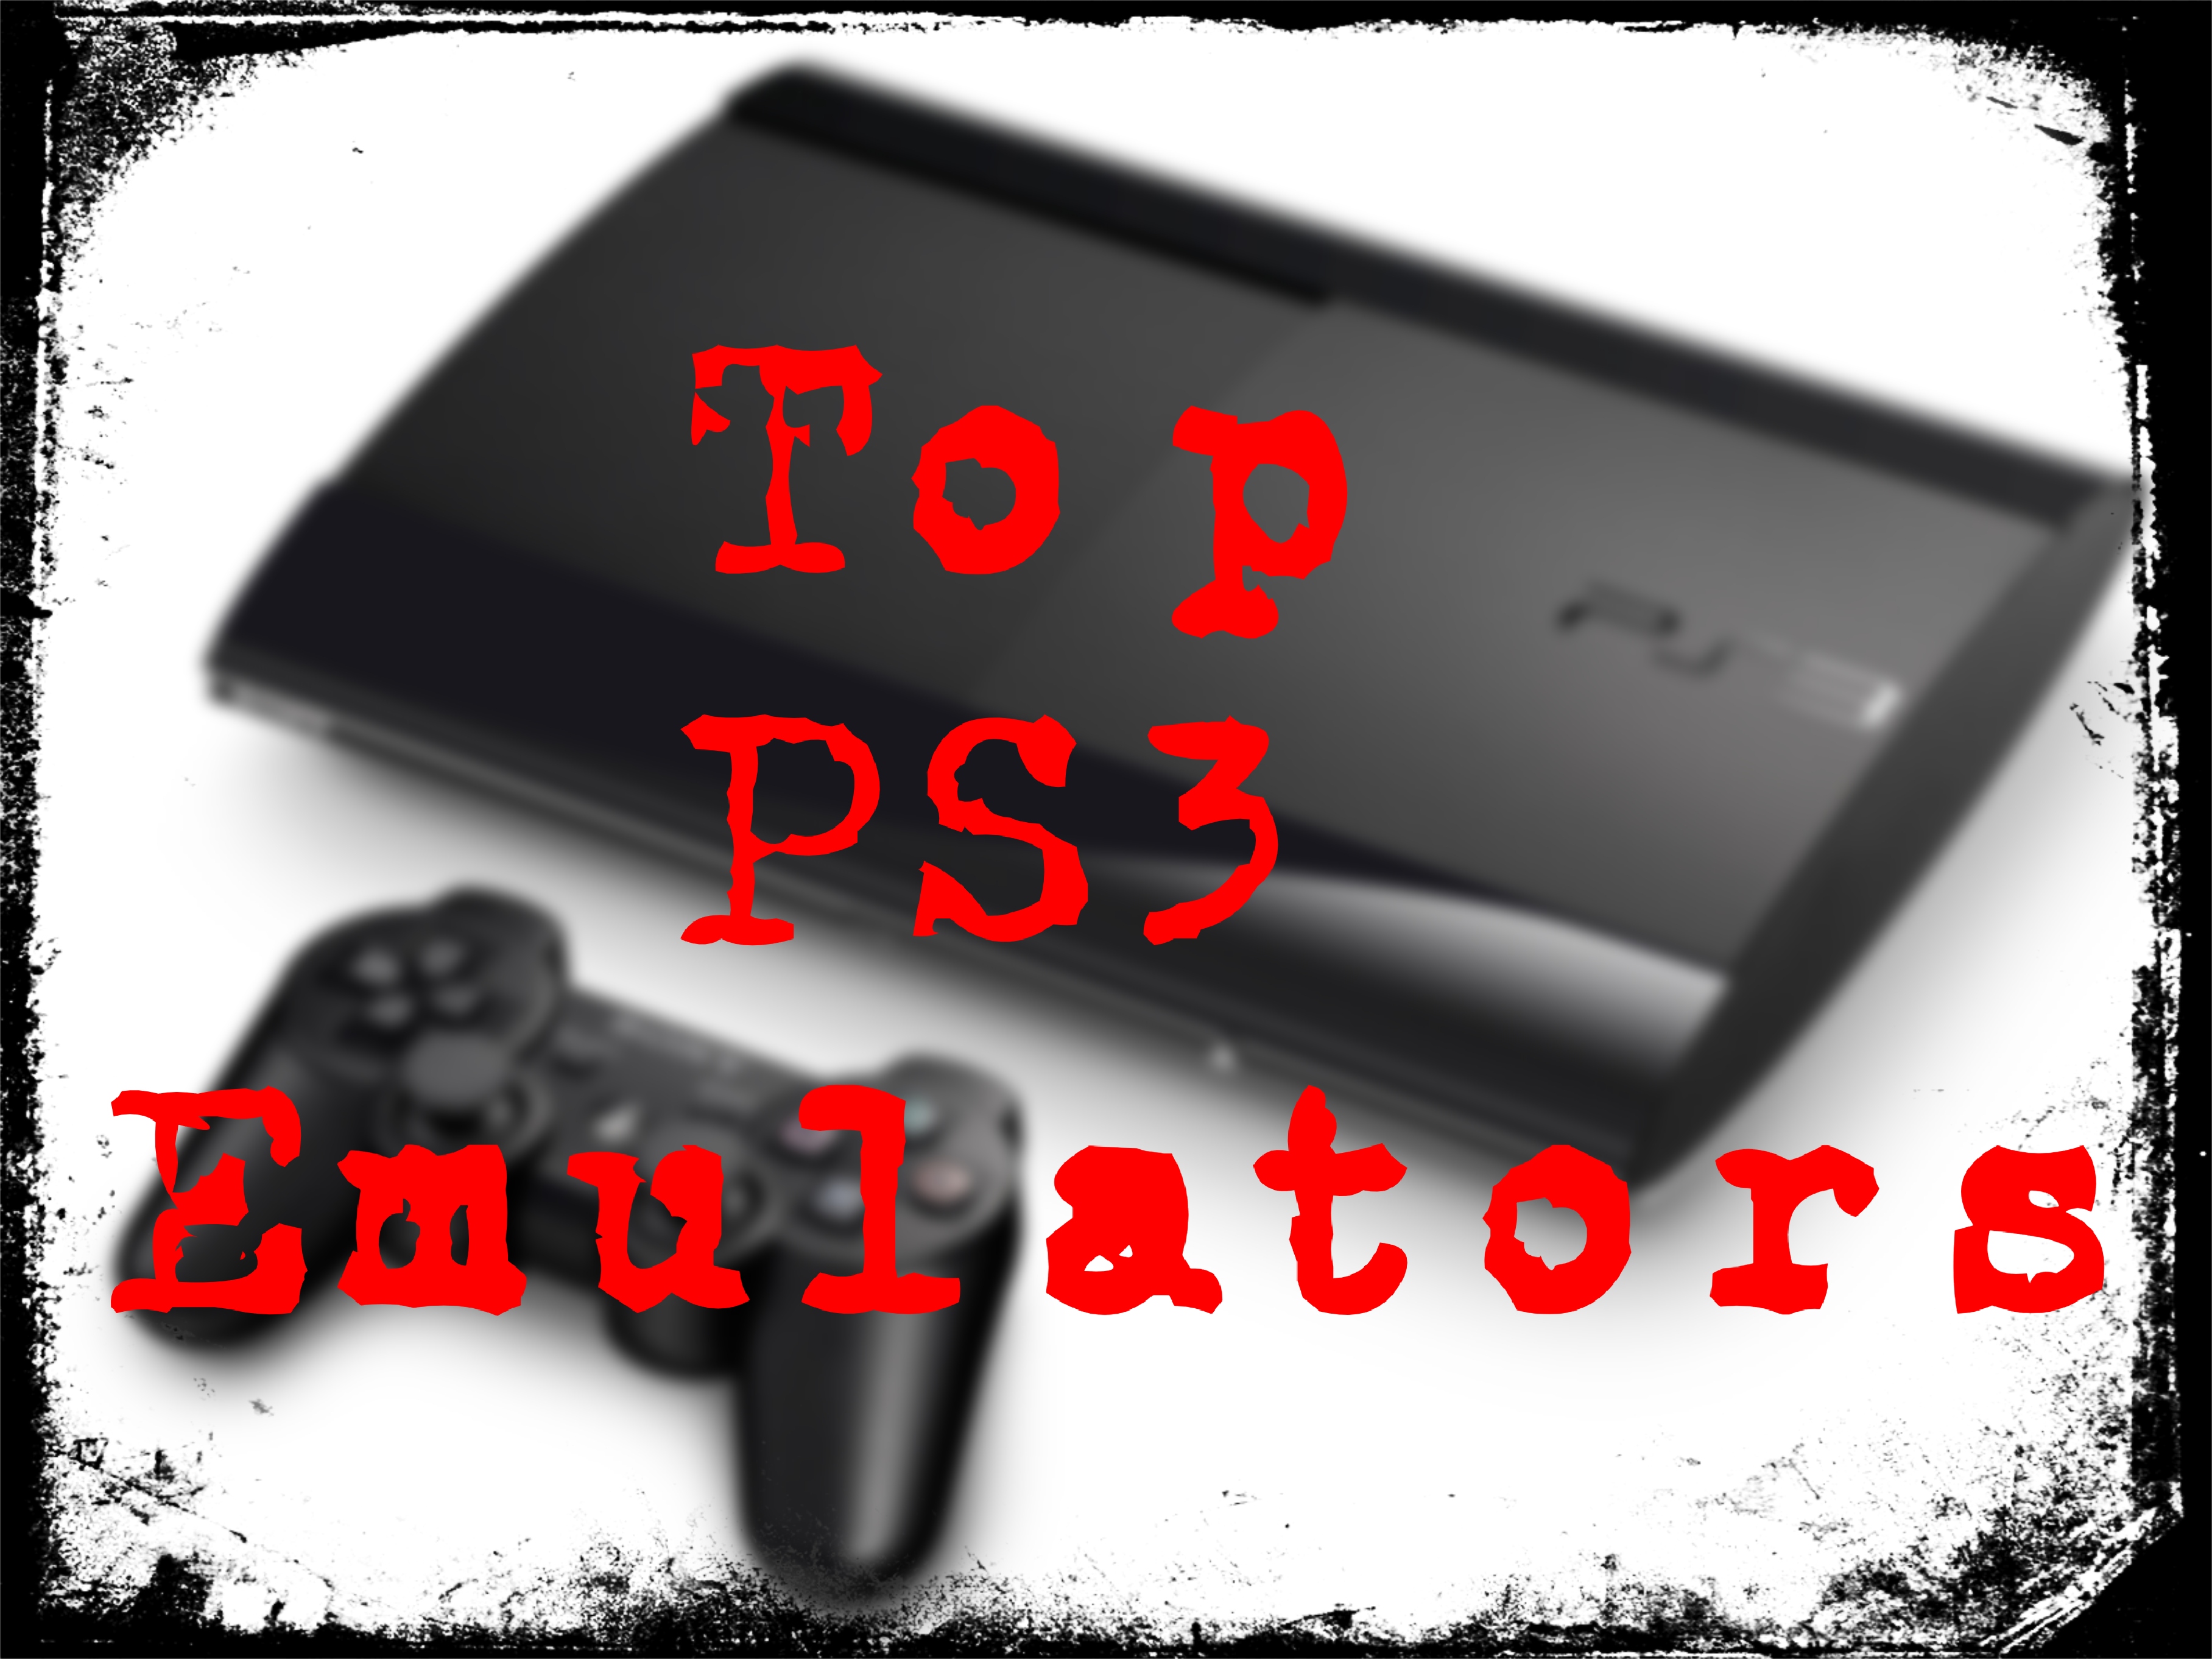 9:45 Desperate threaten Top 7 PS3 Emulators for Windows and Mac